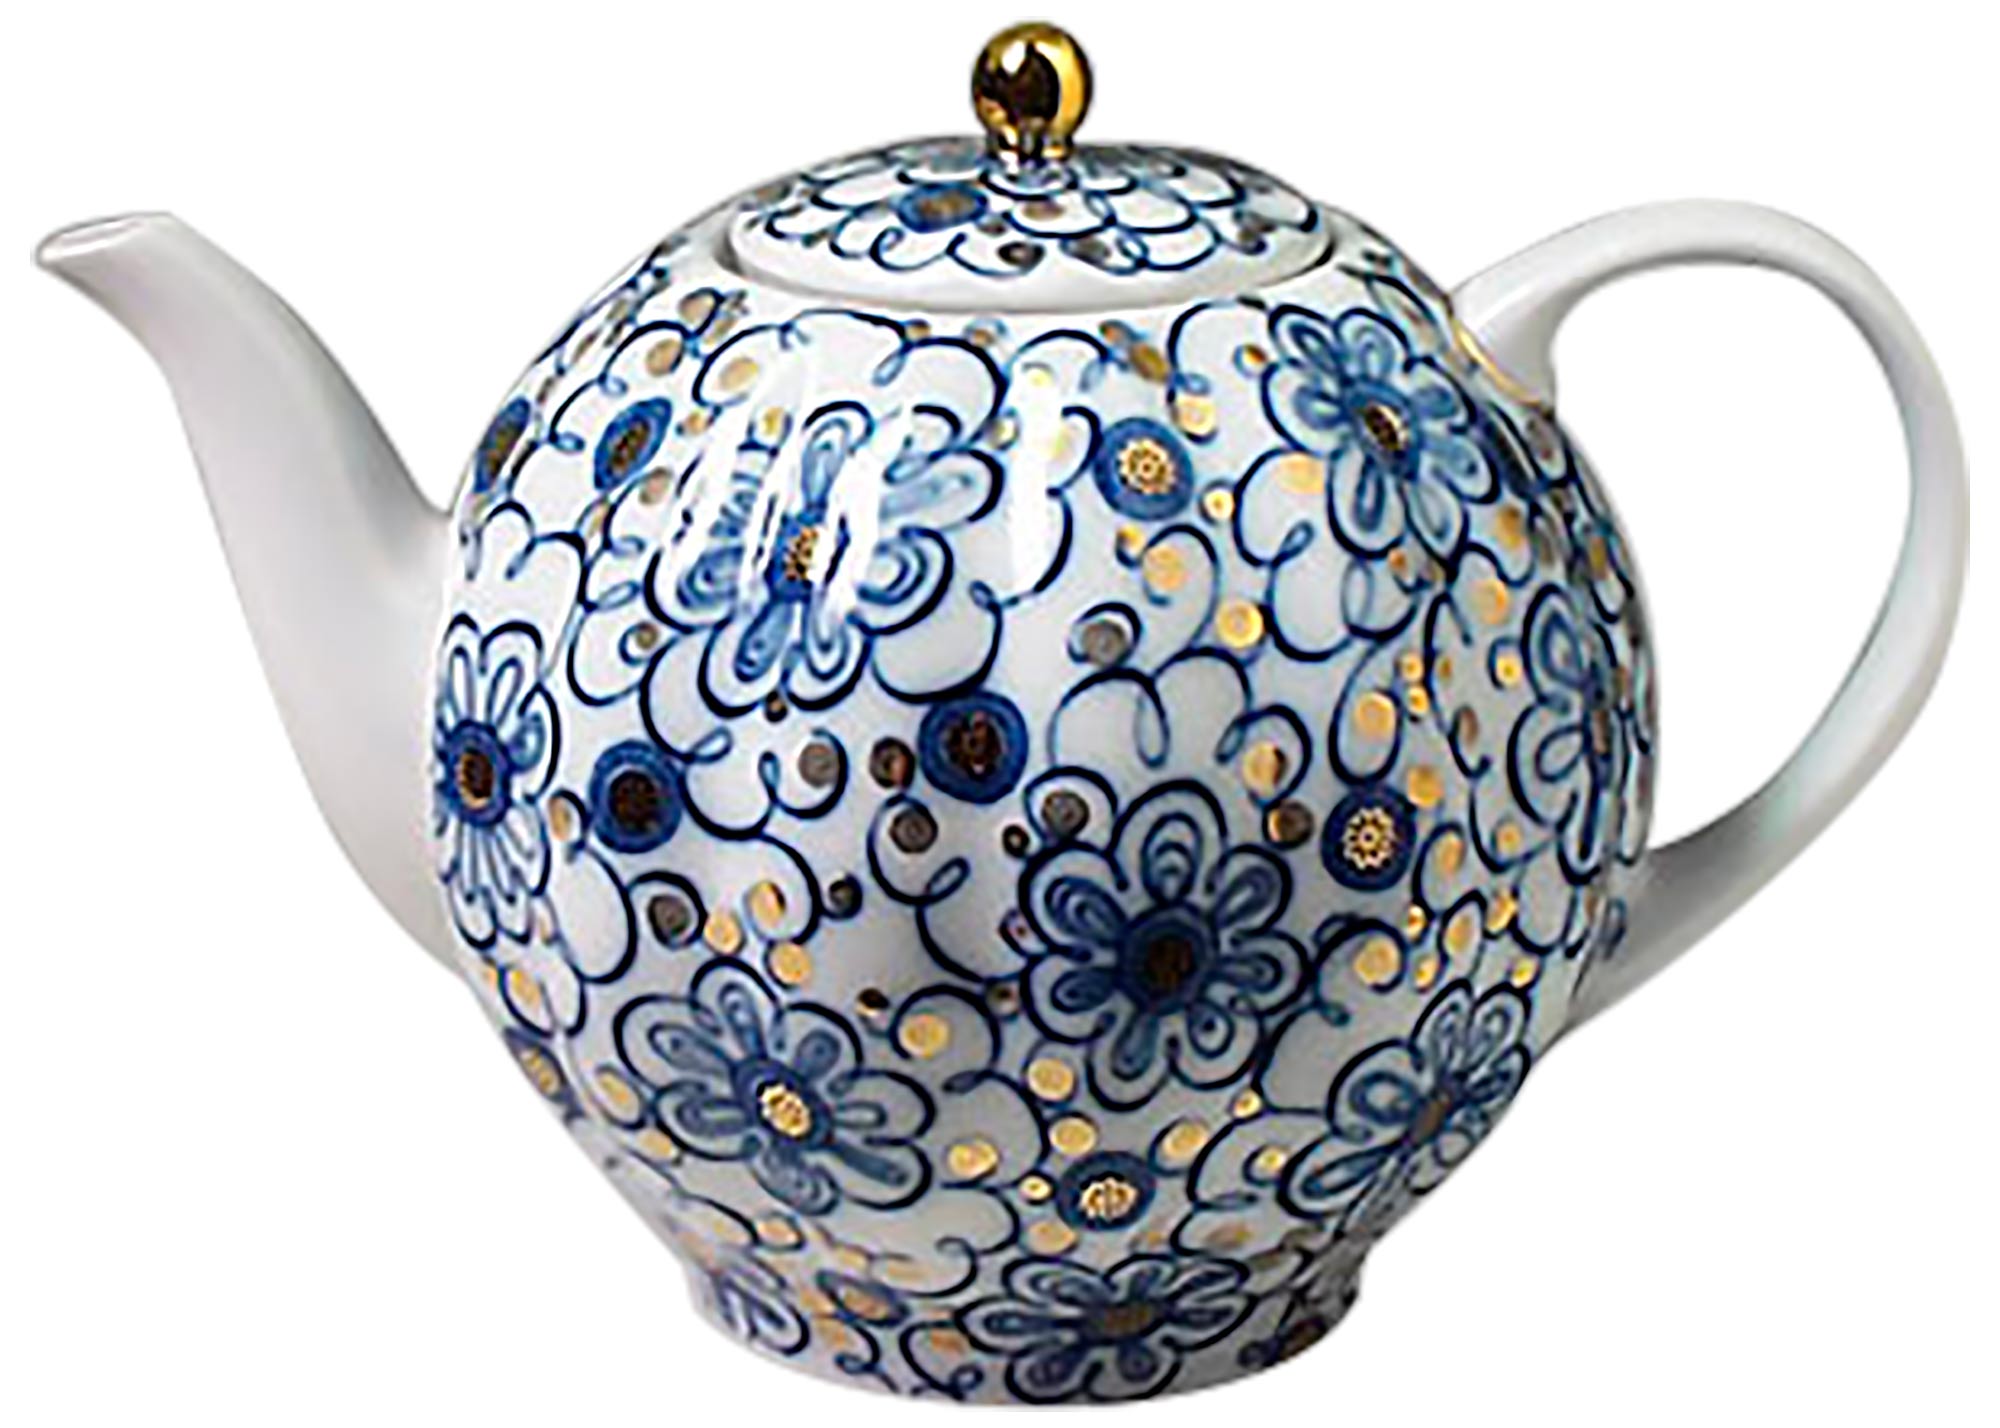 Buy Winding Twig Teapot, large, 9 cup at GoldenCockerel.com